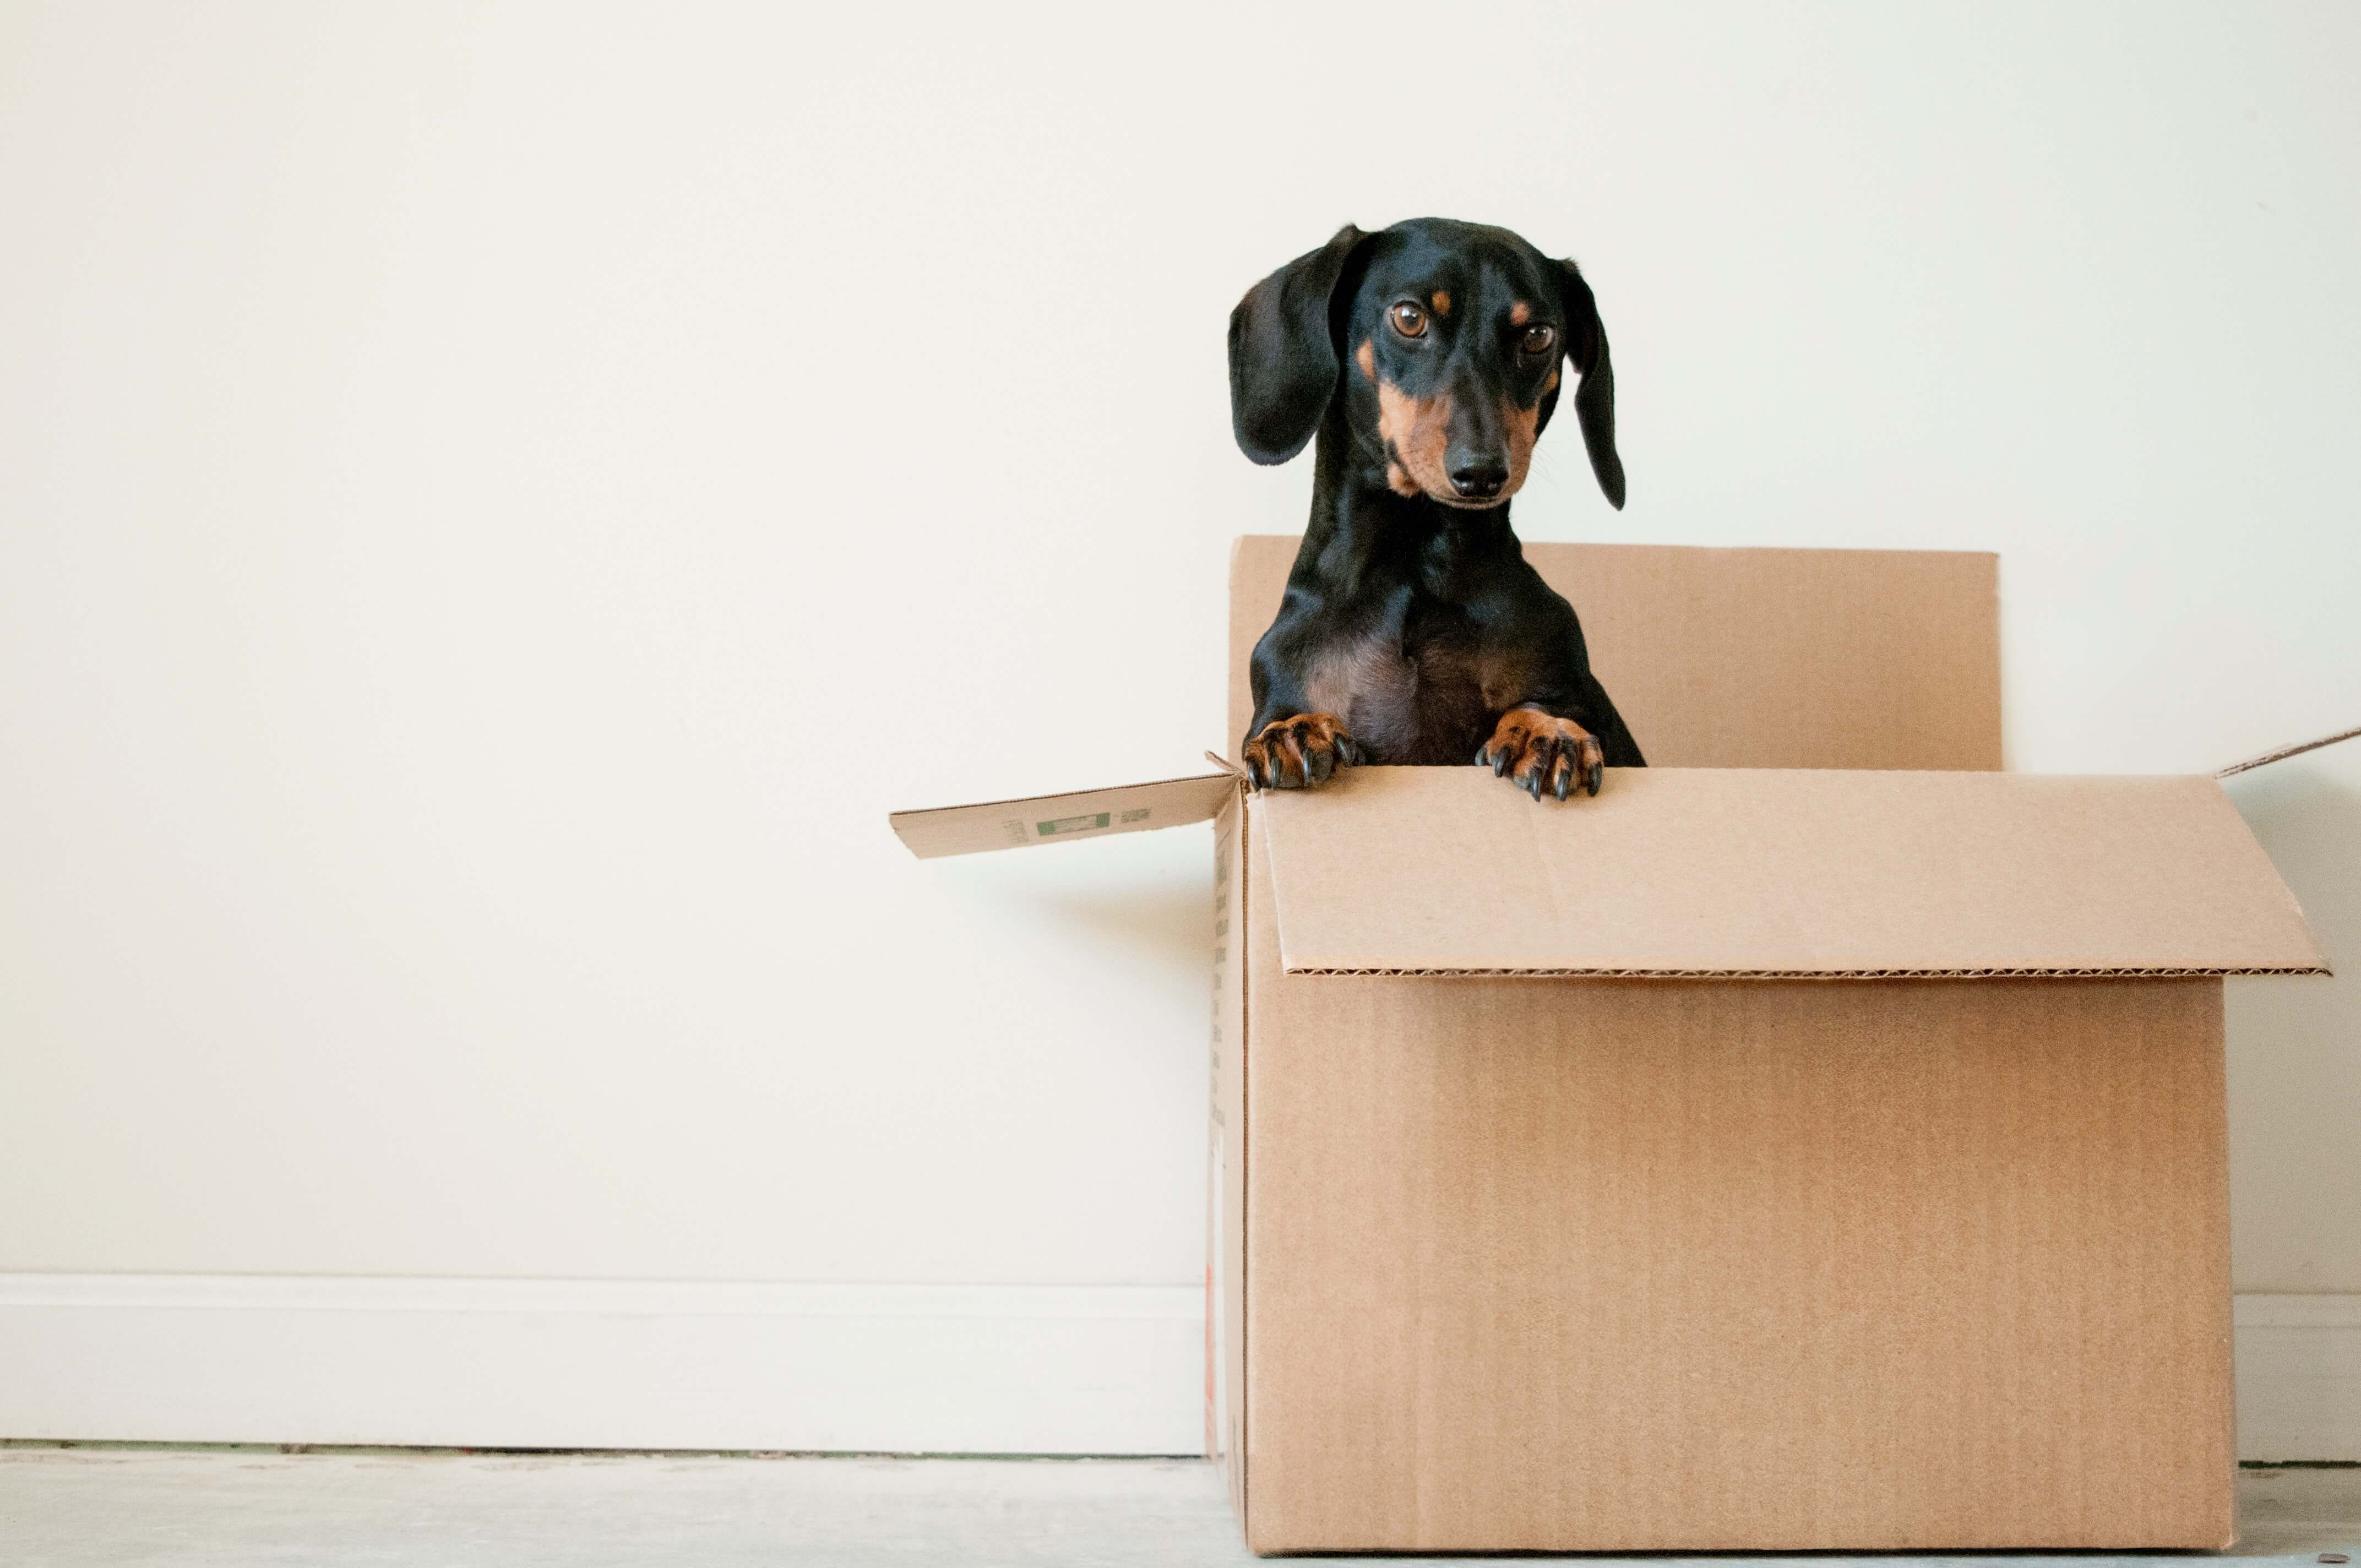 A black dachshund peeking out of a cardboard box